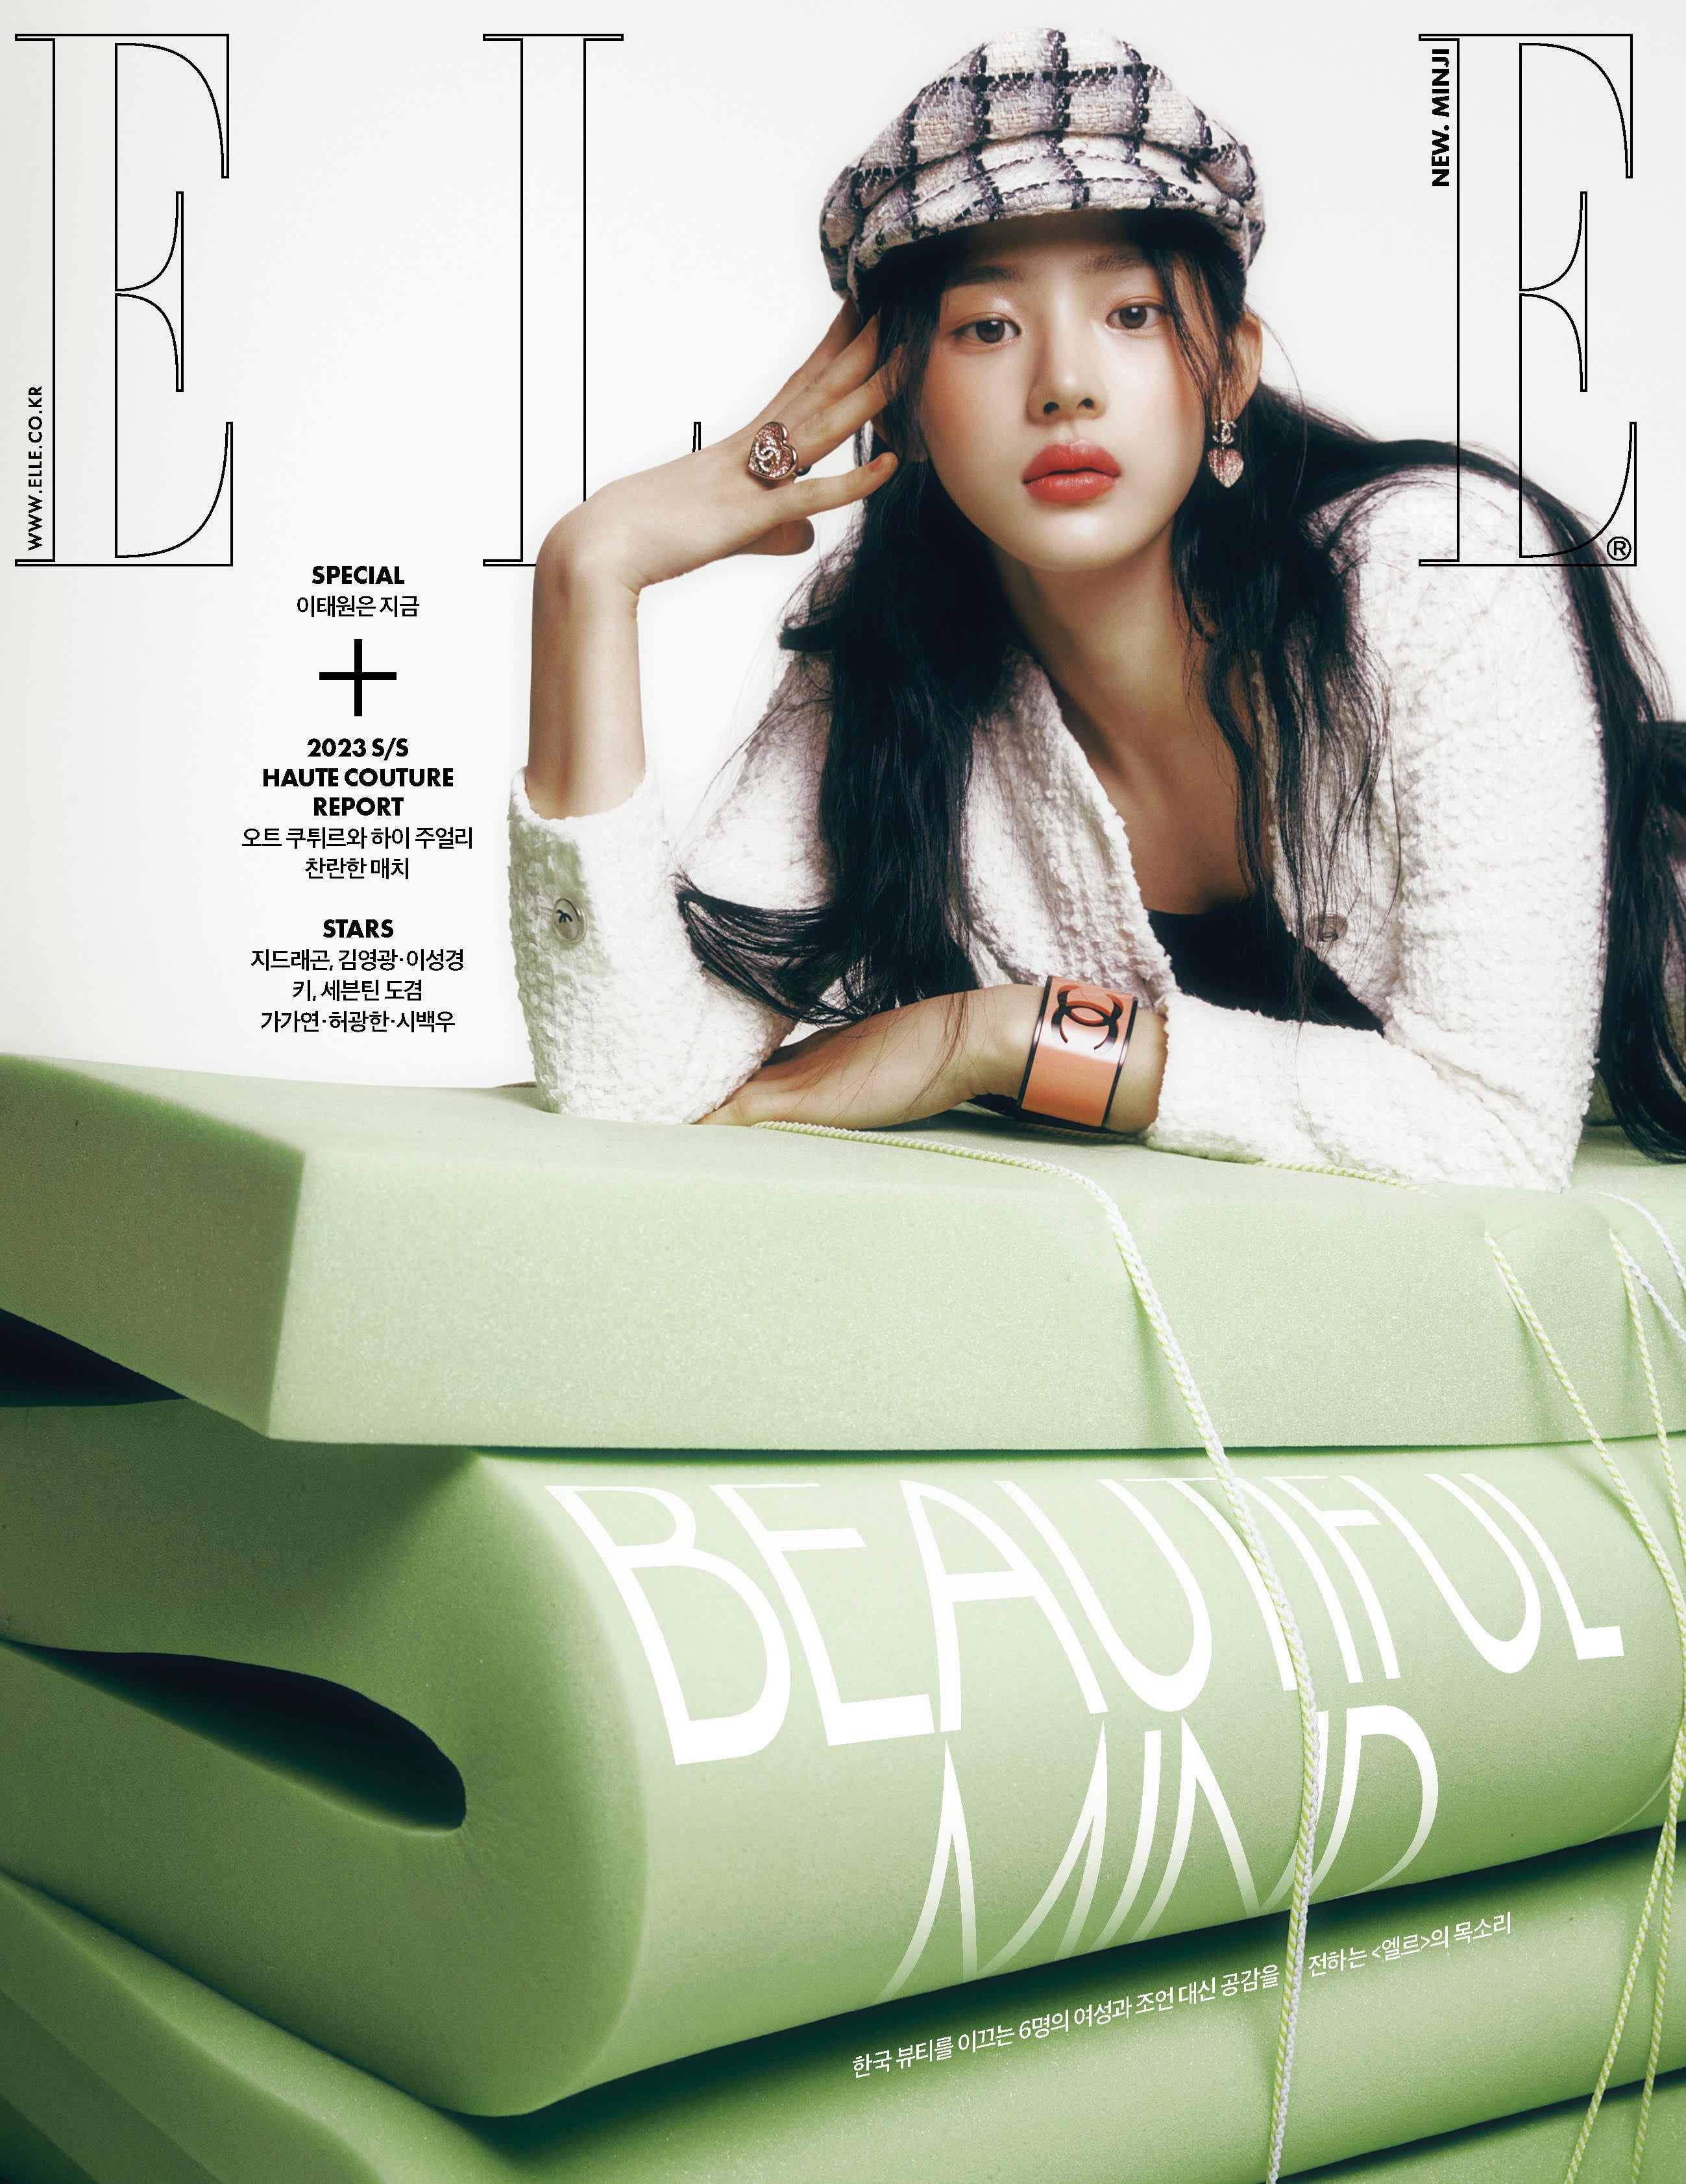 Actresses & Models - Magazine ELLE :: Behance